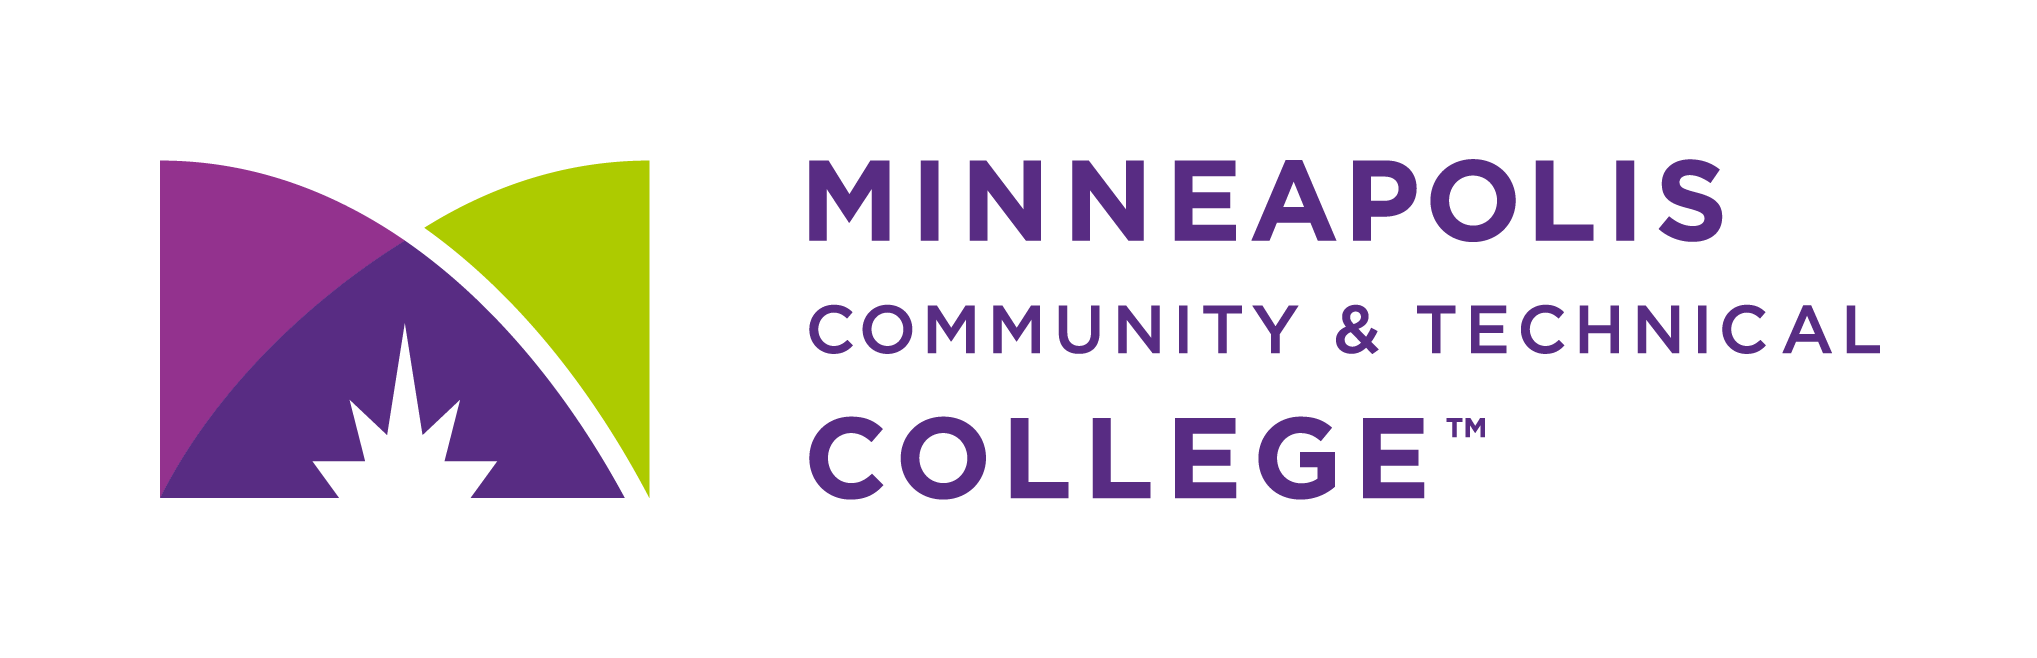 Minneapolis College